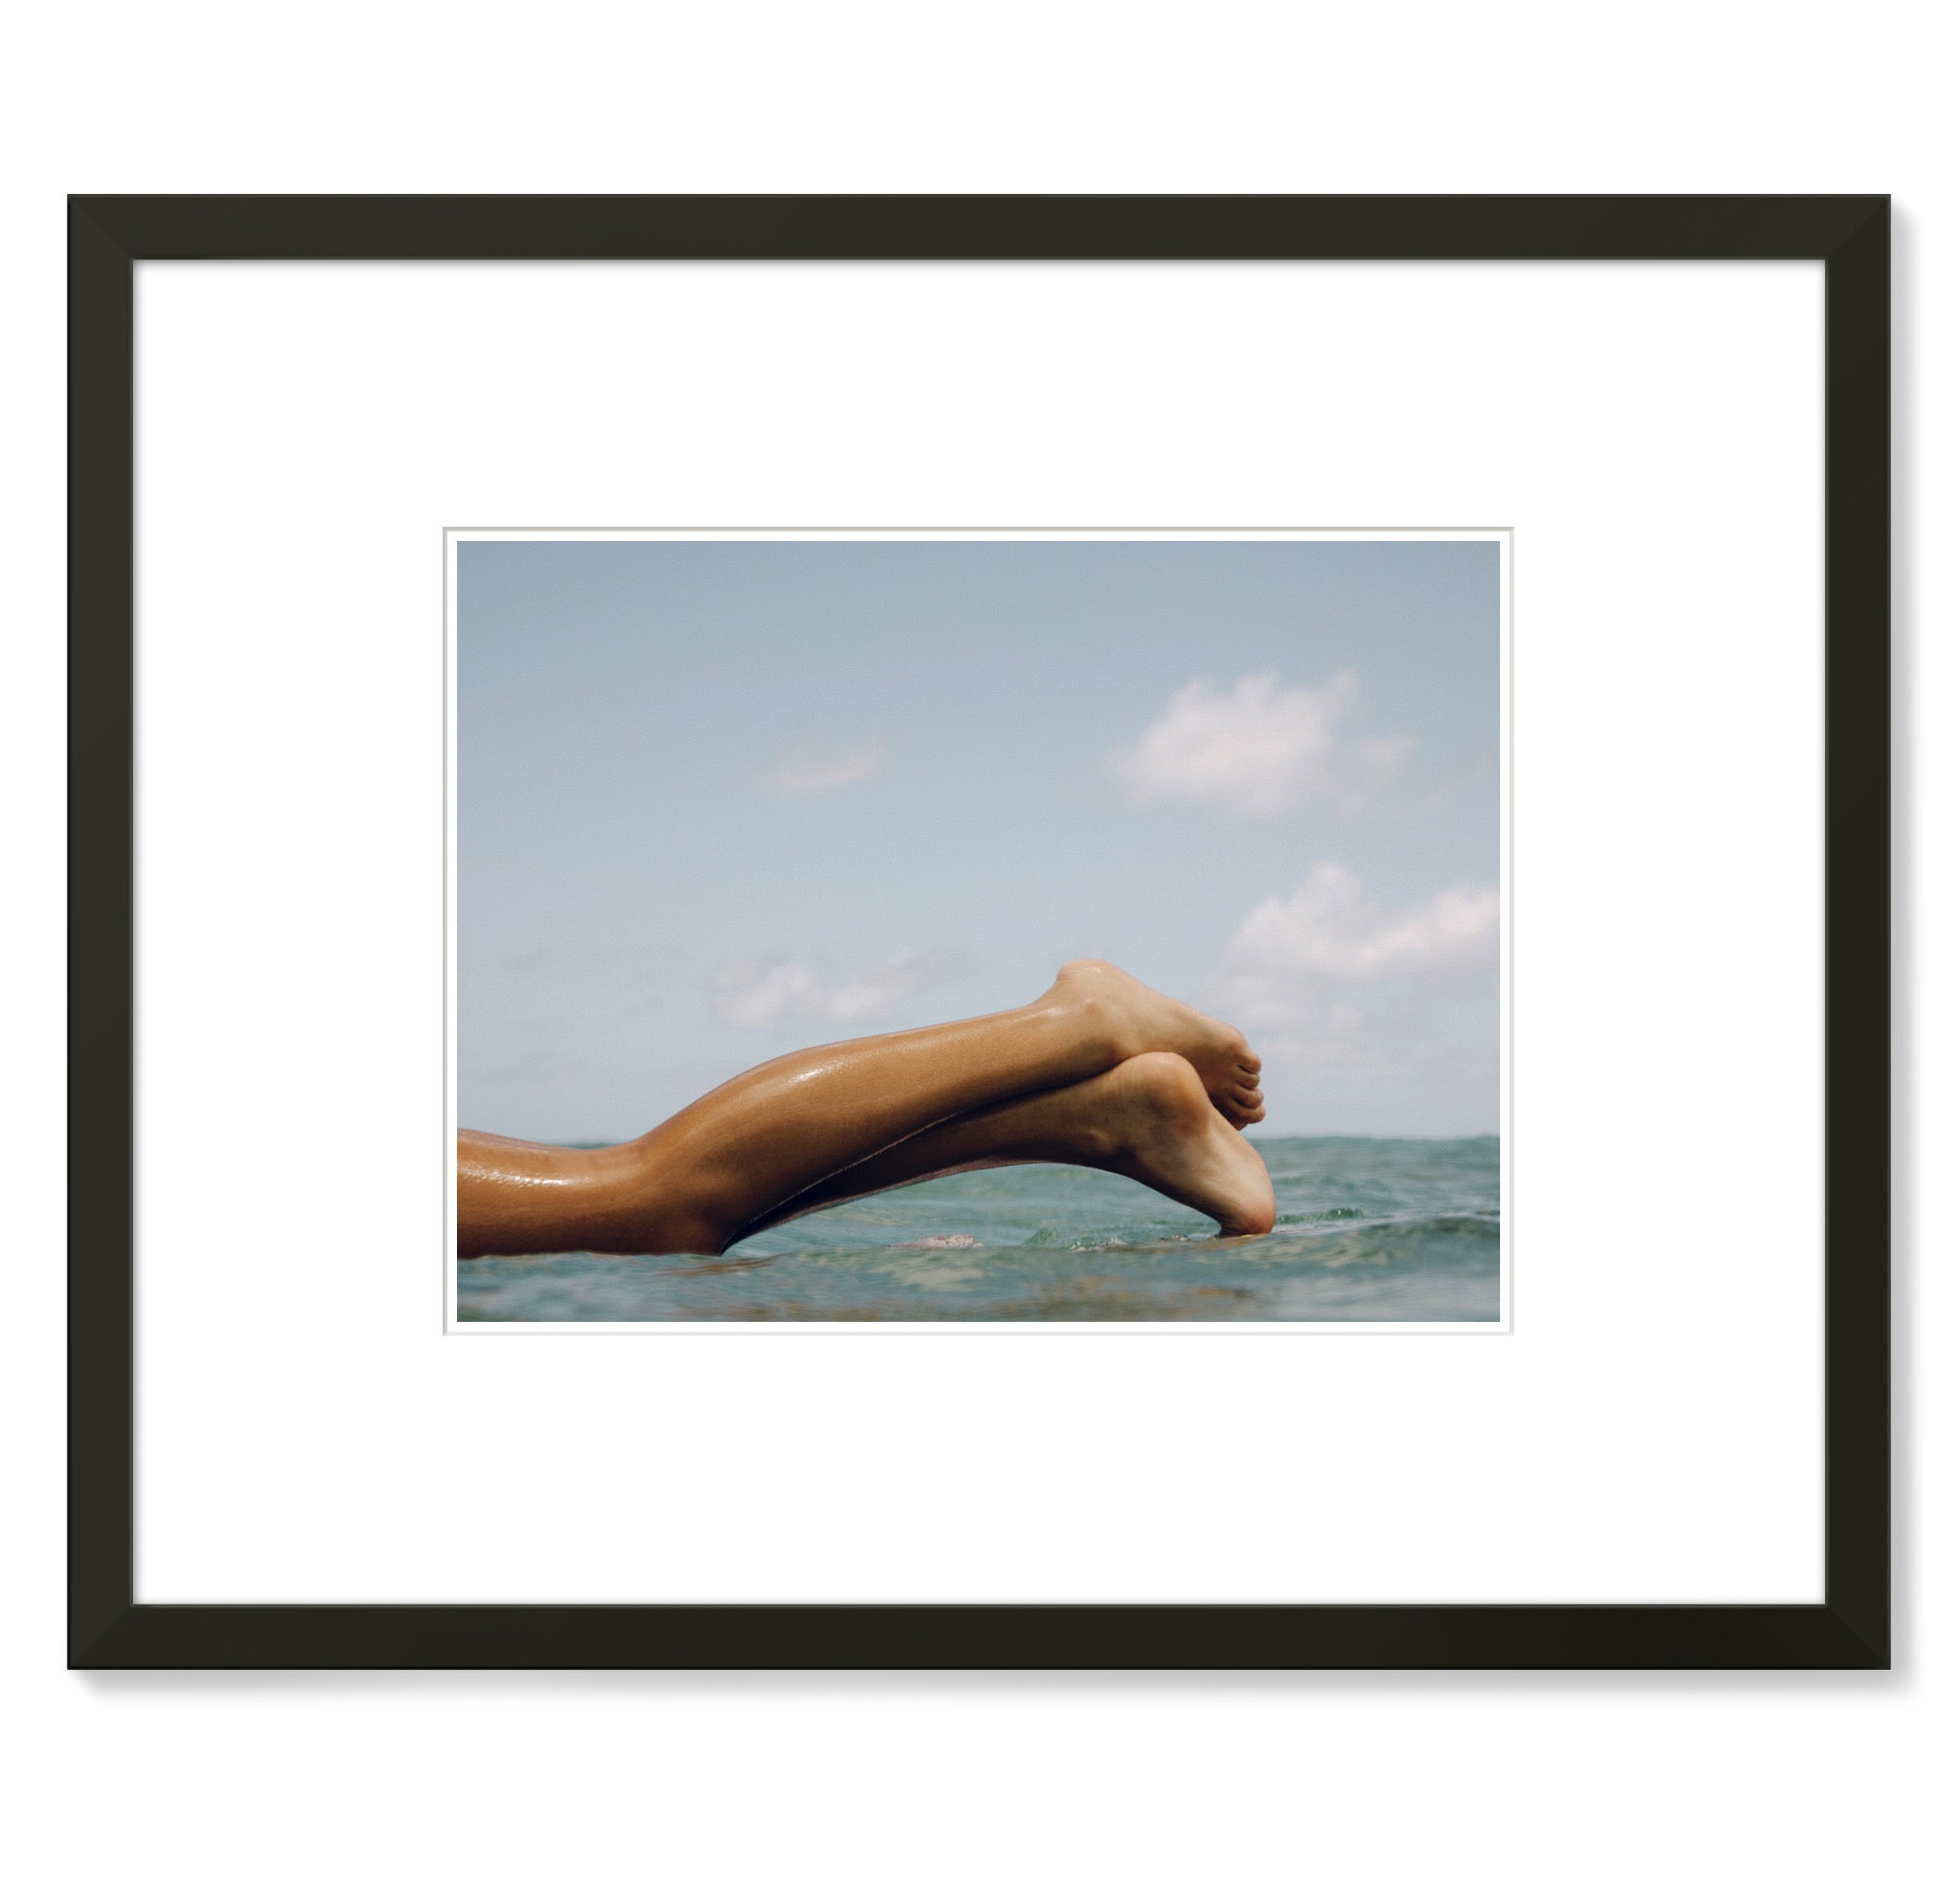 Pendry Newport Beach - Will Adler - 03 - 20 x 16 (USB2016-PNBWA03)